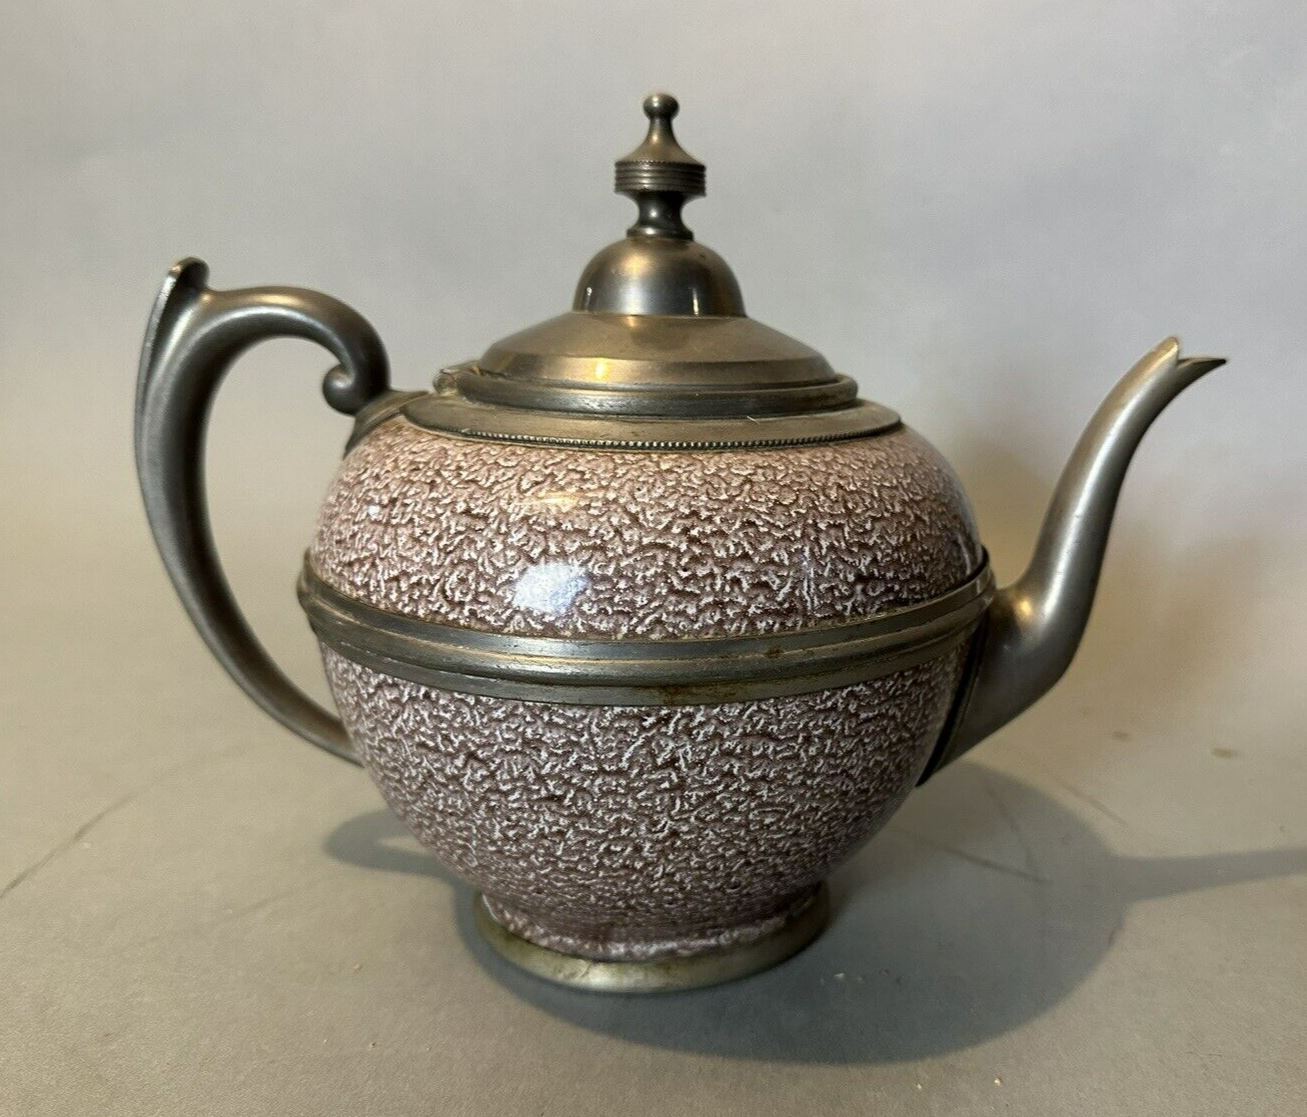 Primitive Antique Country Enamel or Granite Ware Sponge Decorated Teapot